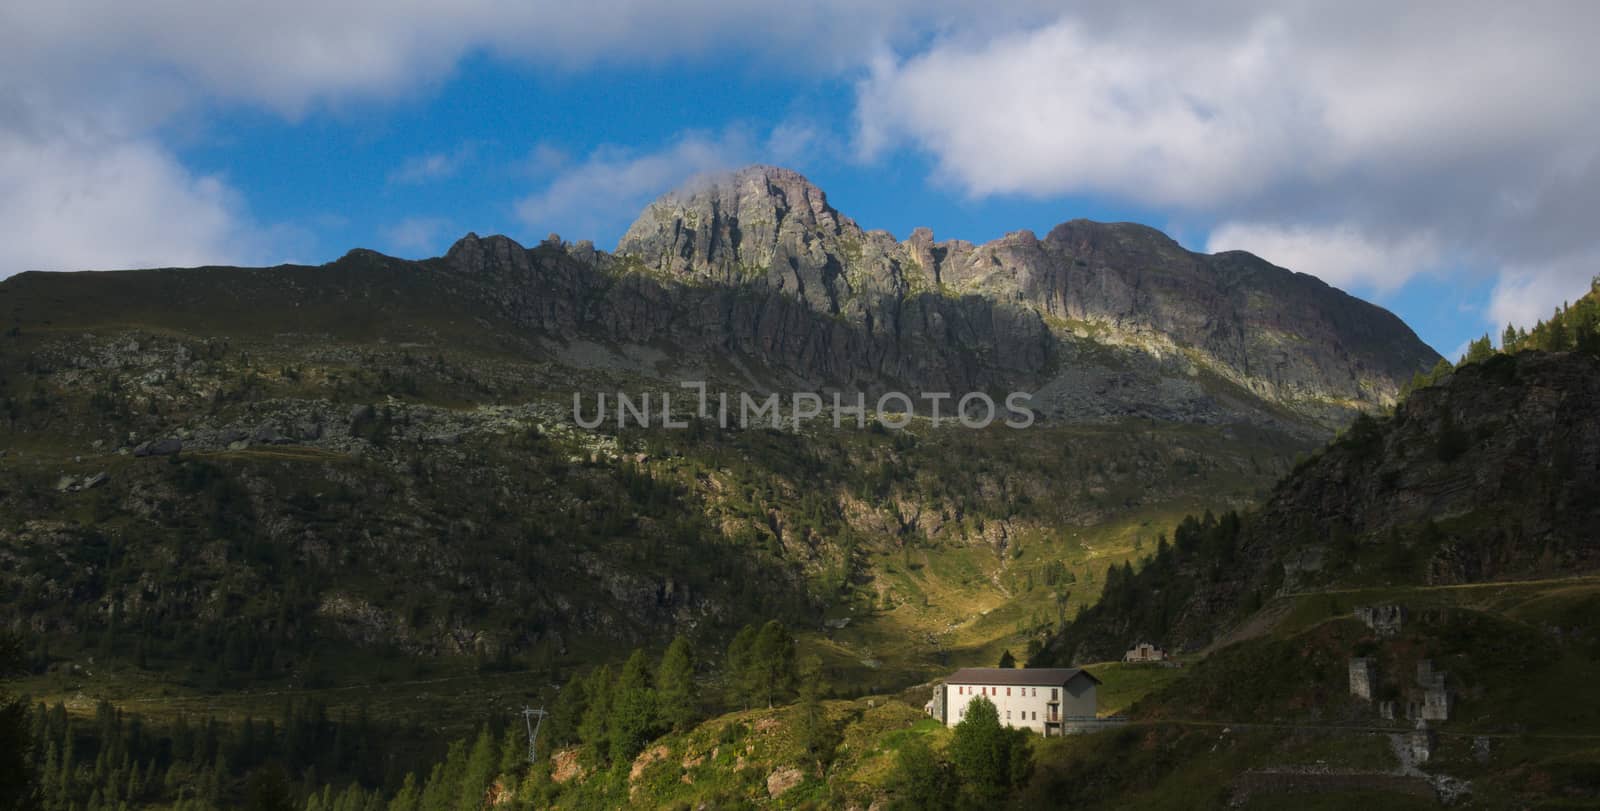 Pizzo del becco peak on the Bergamo Alps, northern Italy
